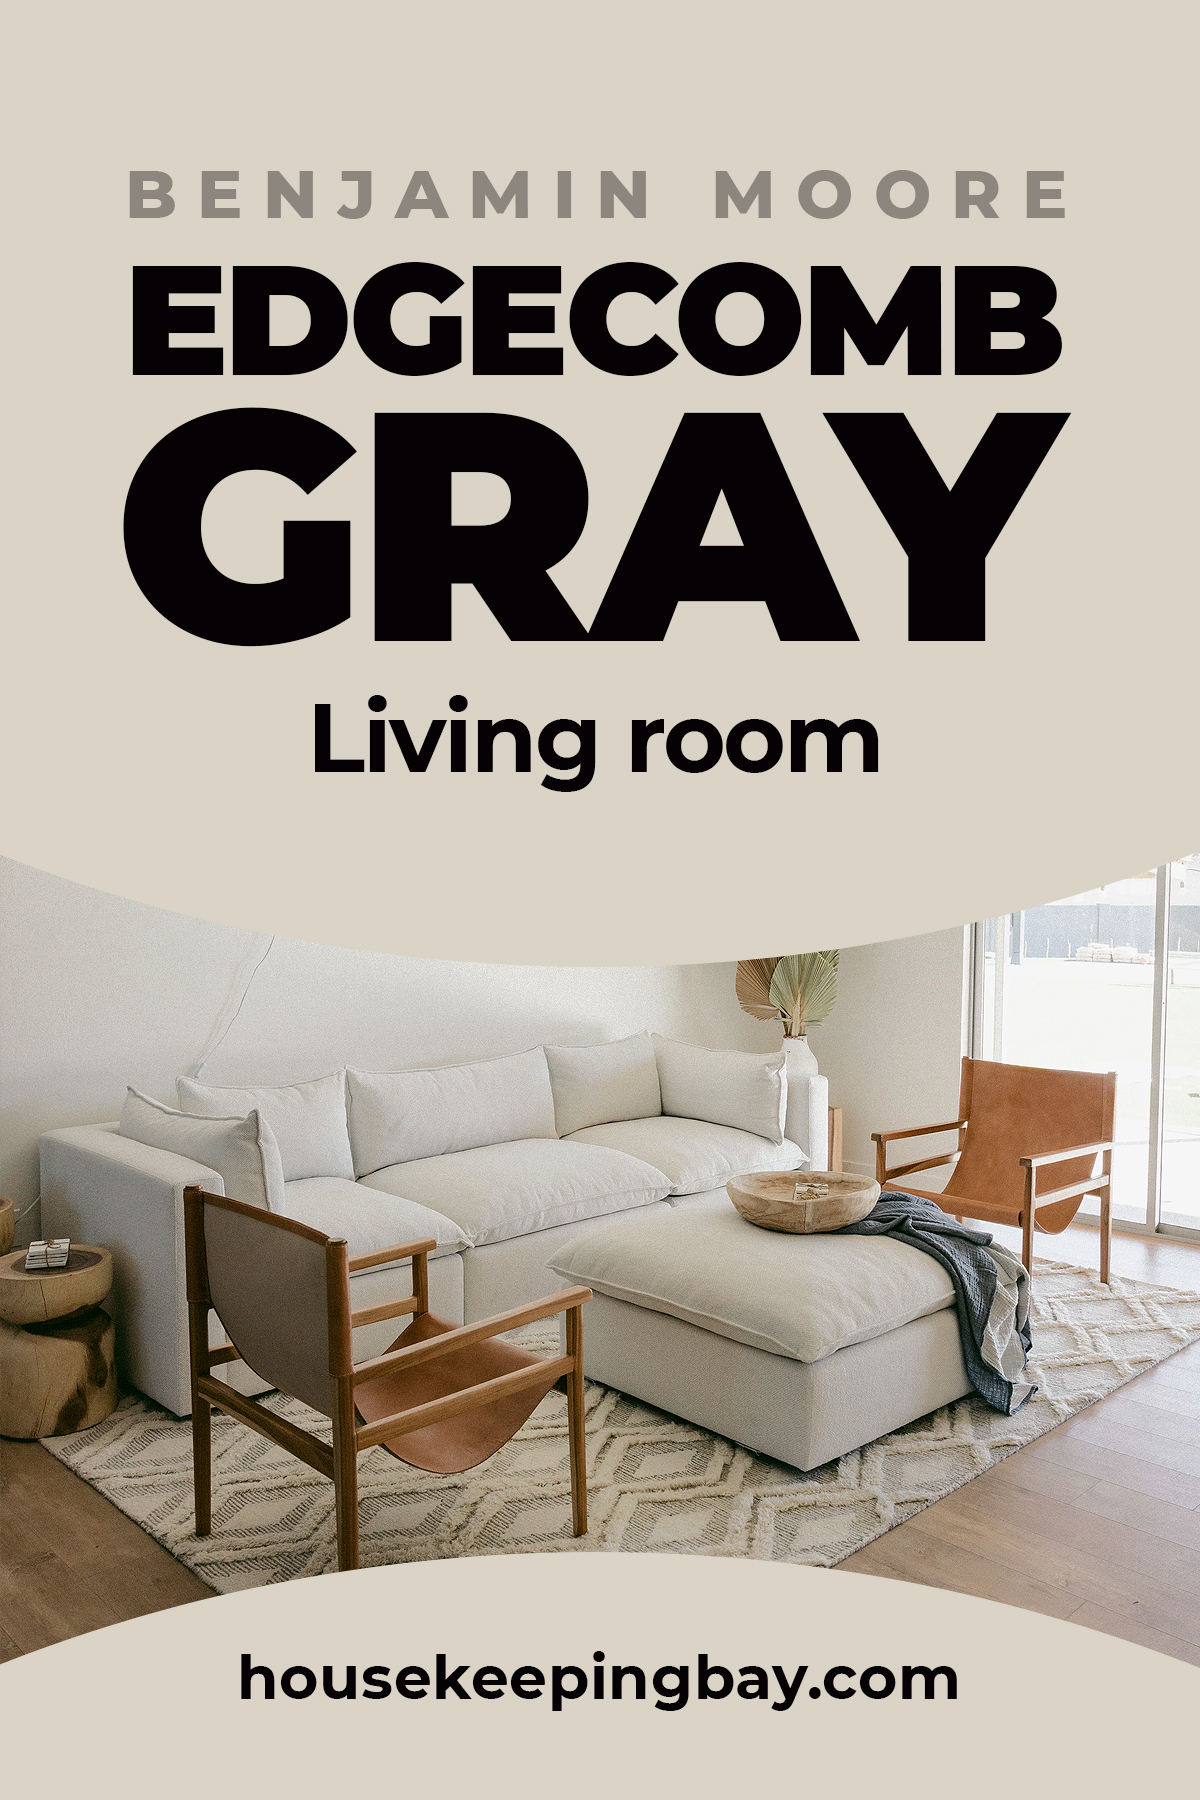 Edgecomb Gray living room